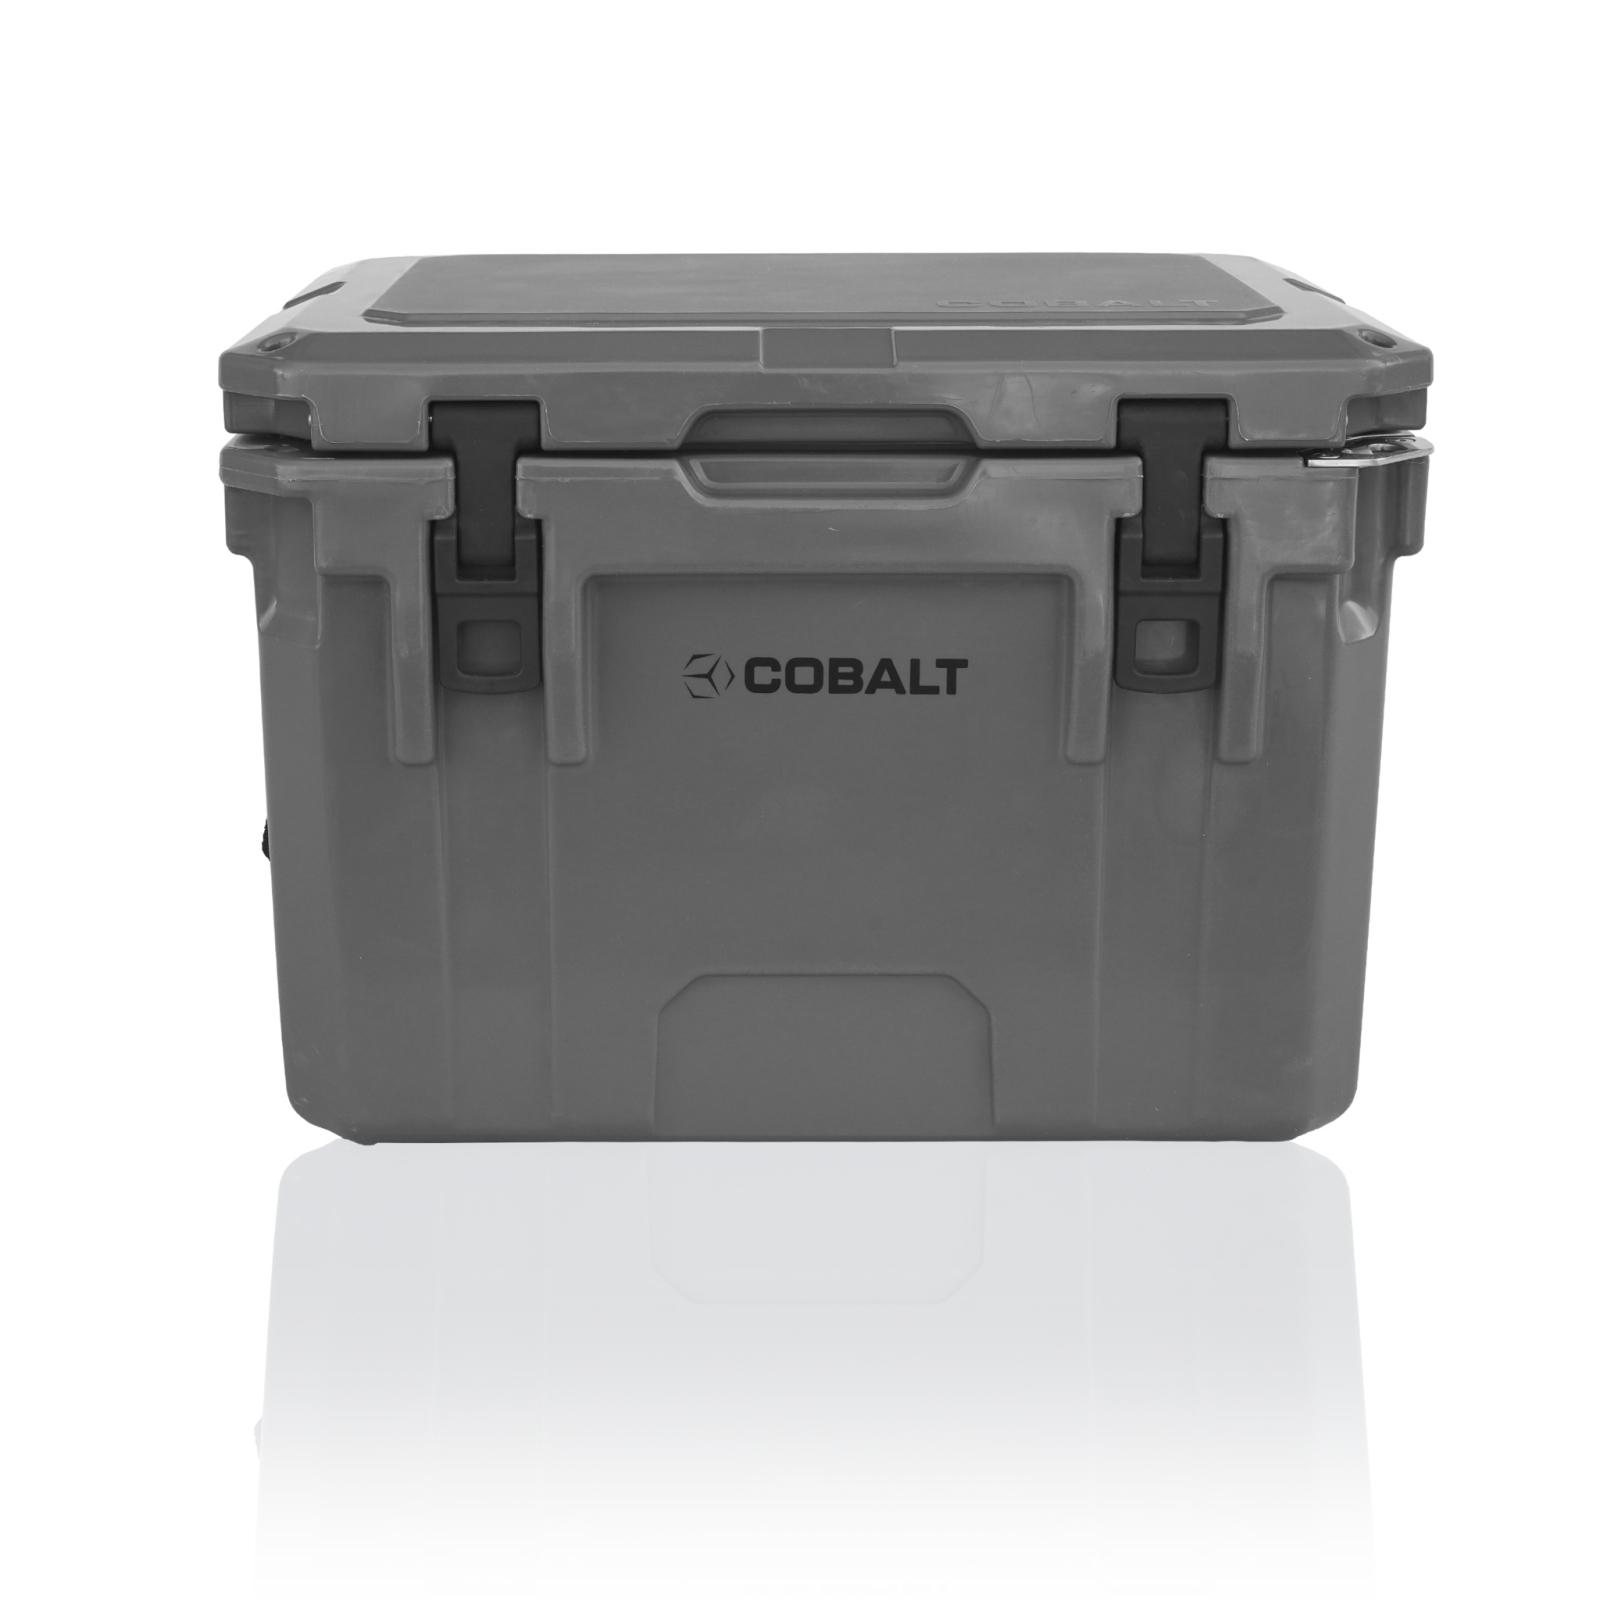 Cobalt 25 Qt. Rotomolded Cooler